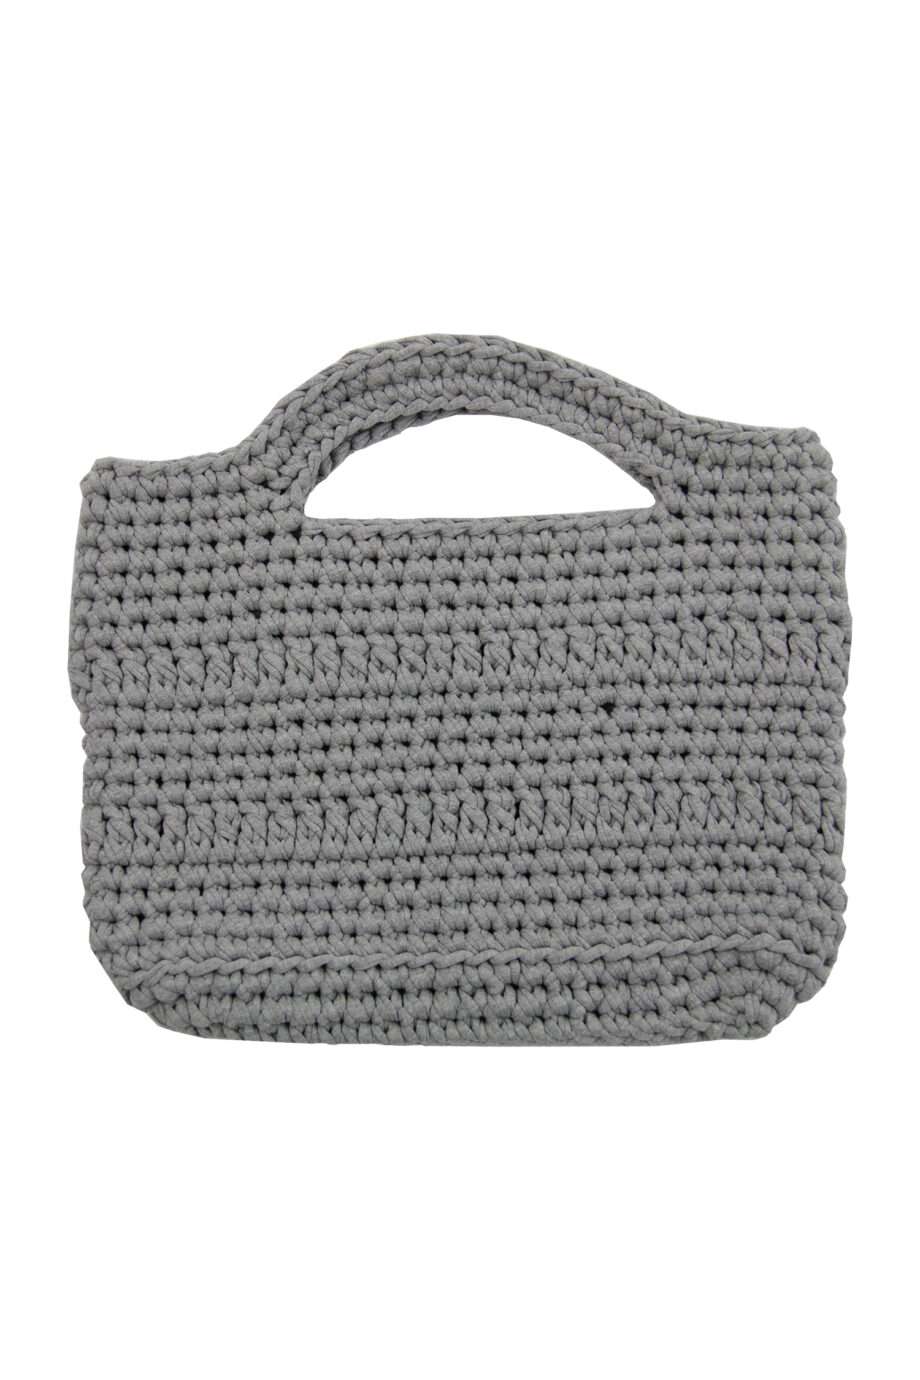 basic grey crochet cotton shopper